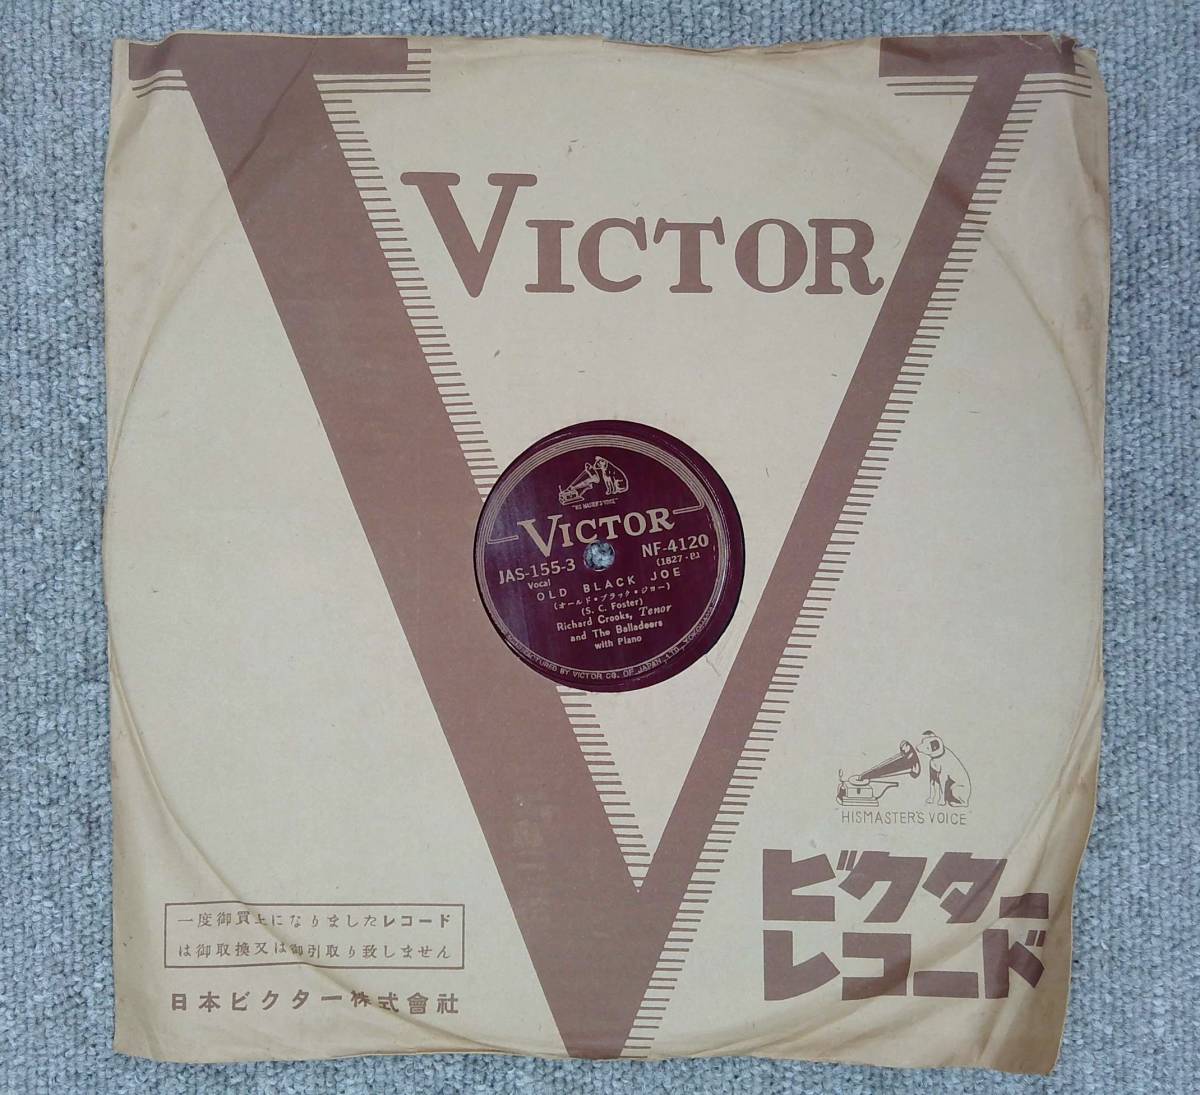 SP盤レコード Richard Crocks / 金髪のジェニー / OLD BLACK JOE Vocal NF-4120 ビクター ny30_画像5